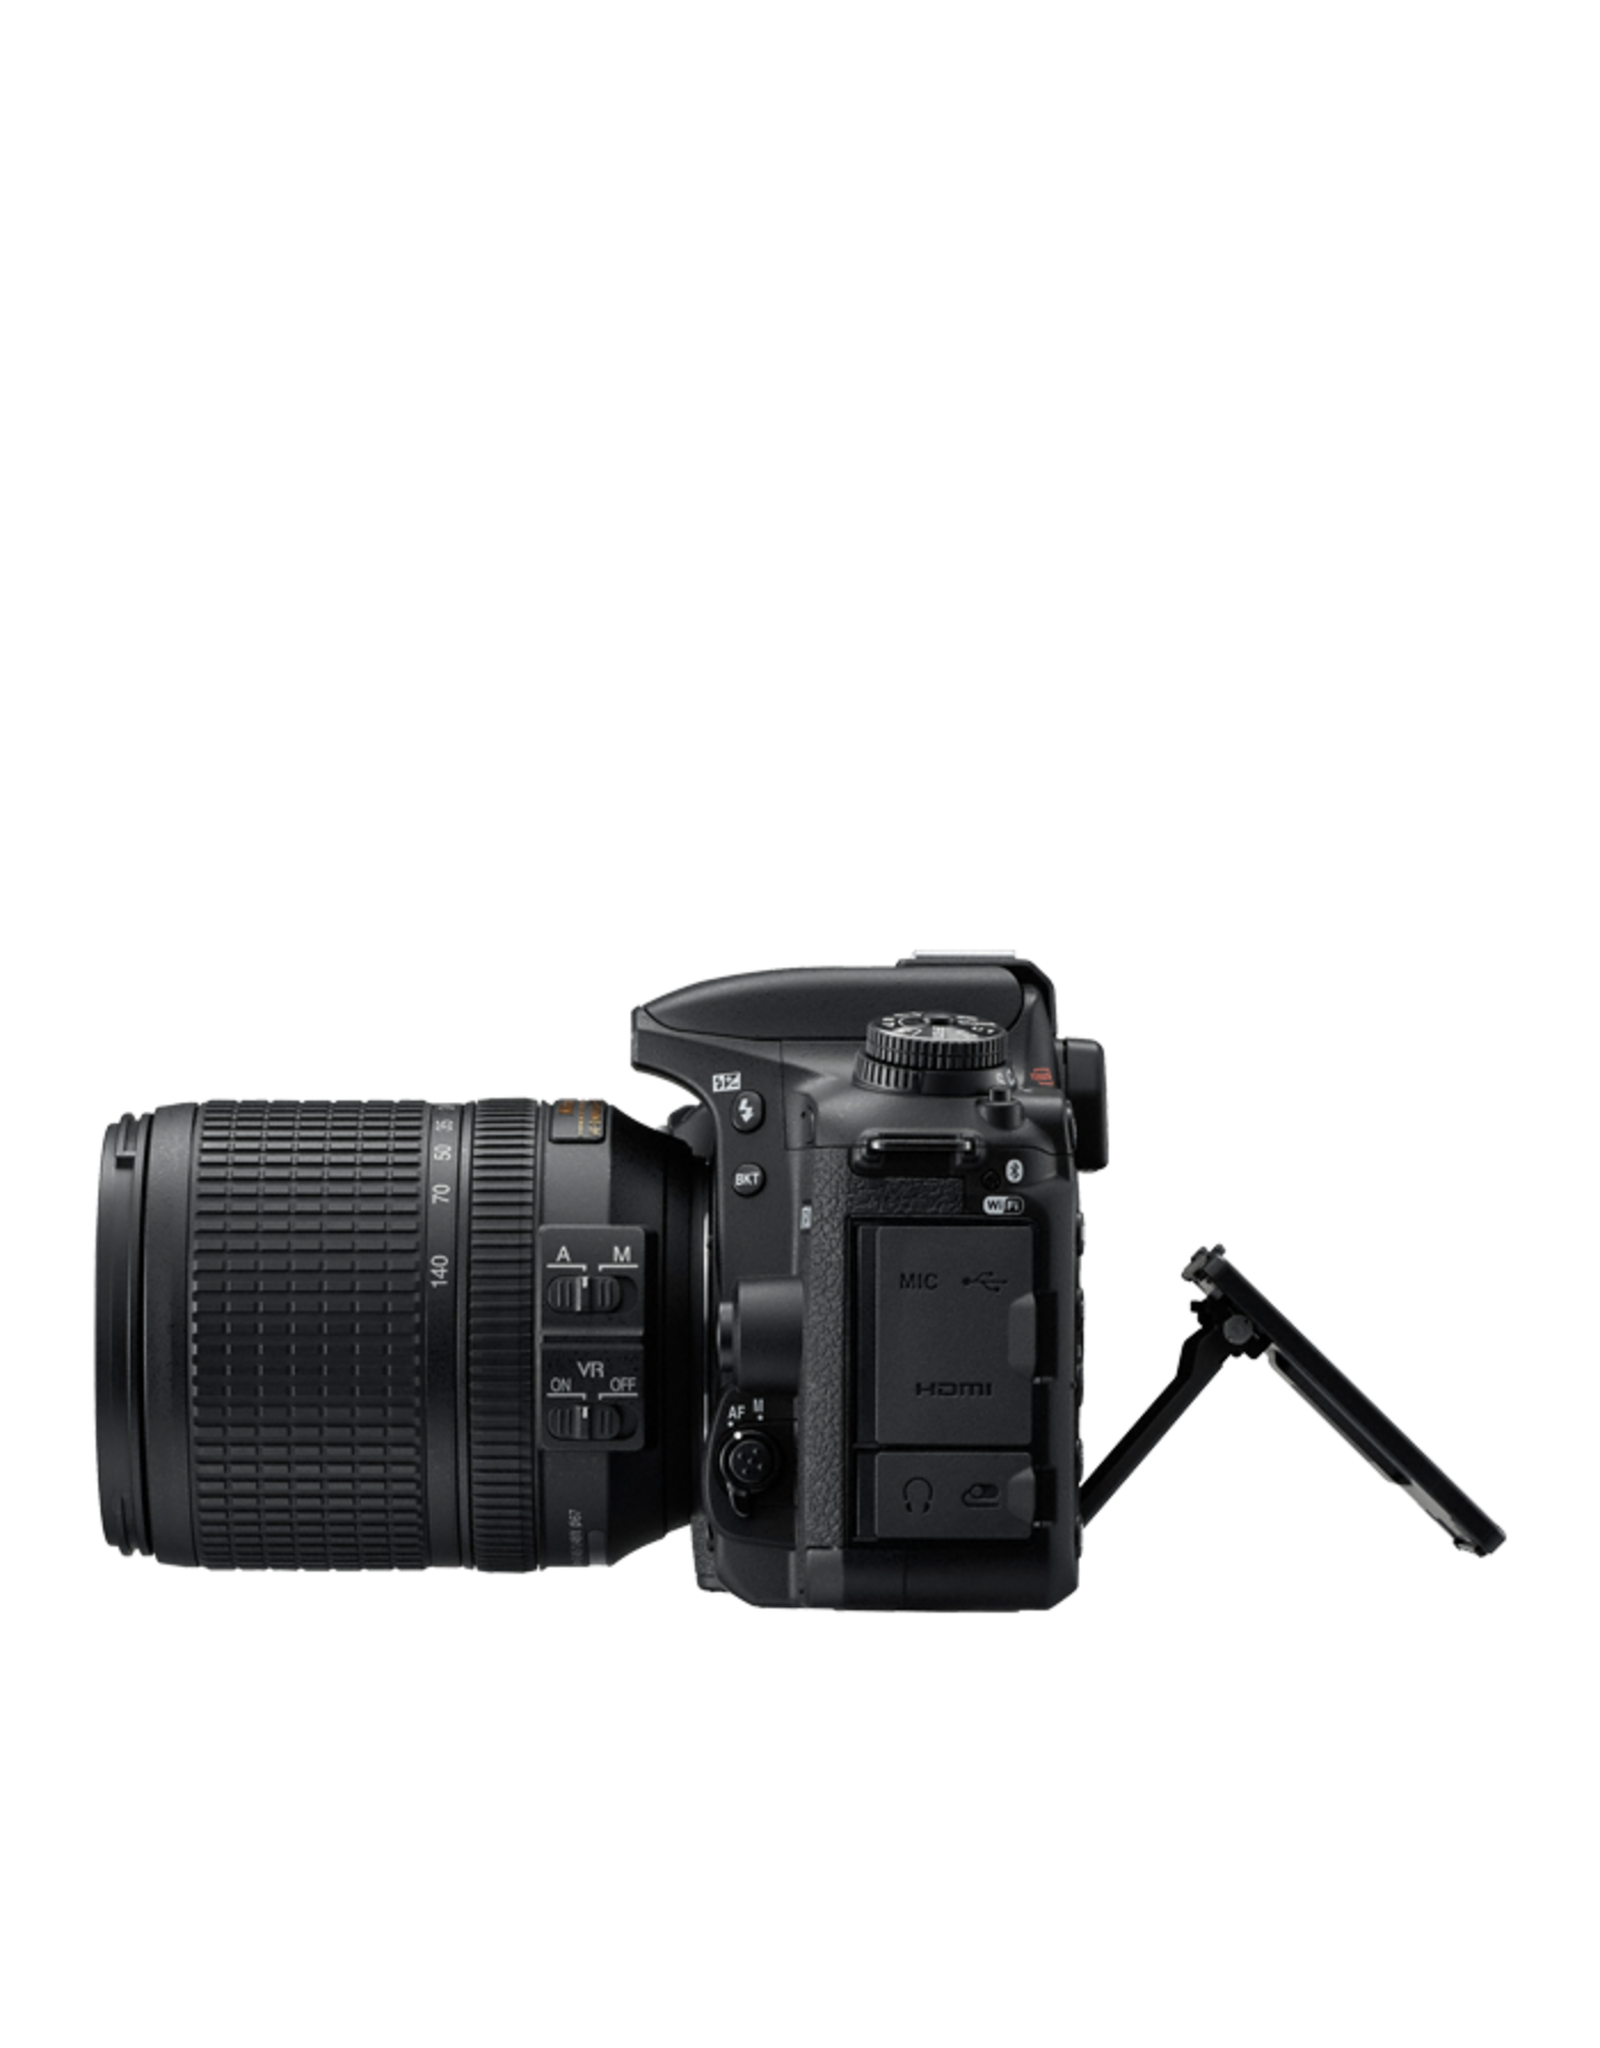 Nikon Nikon D7500 DSLR with 18-300mm Lens